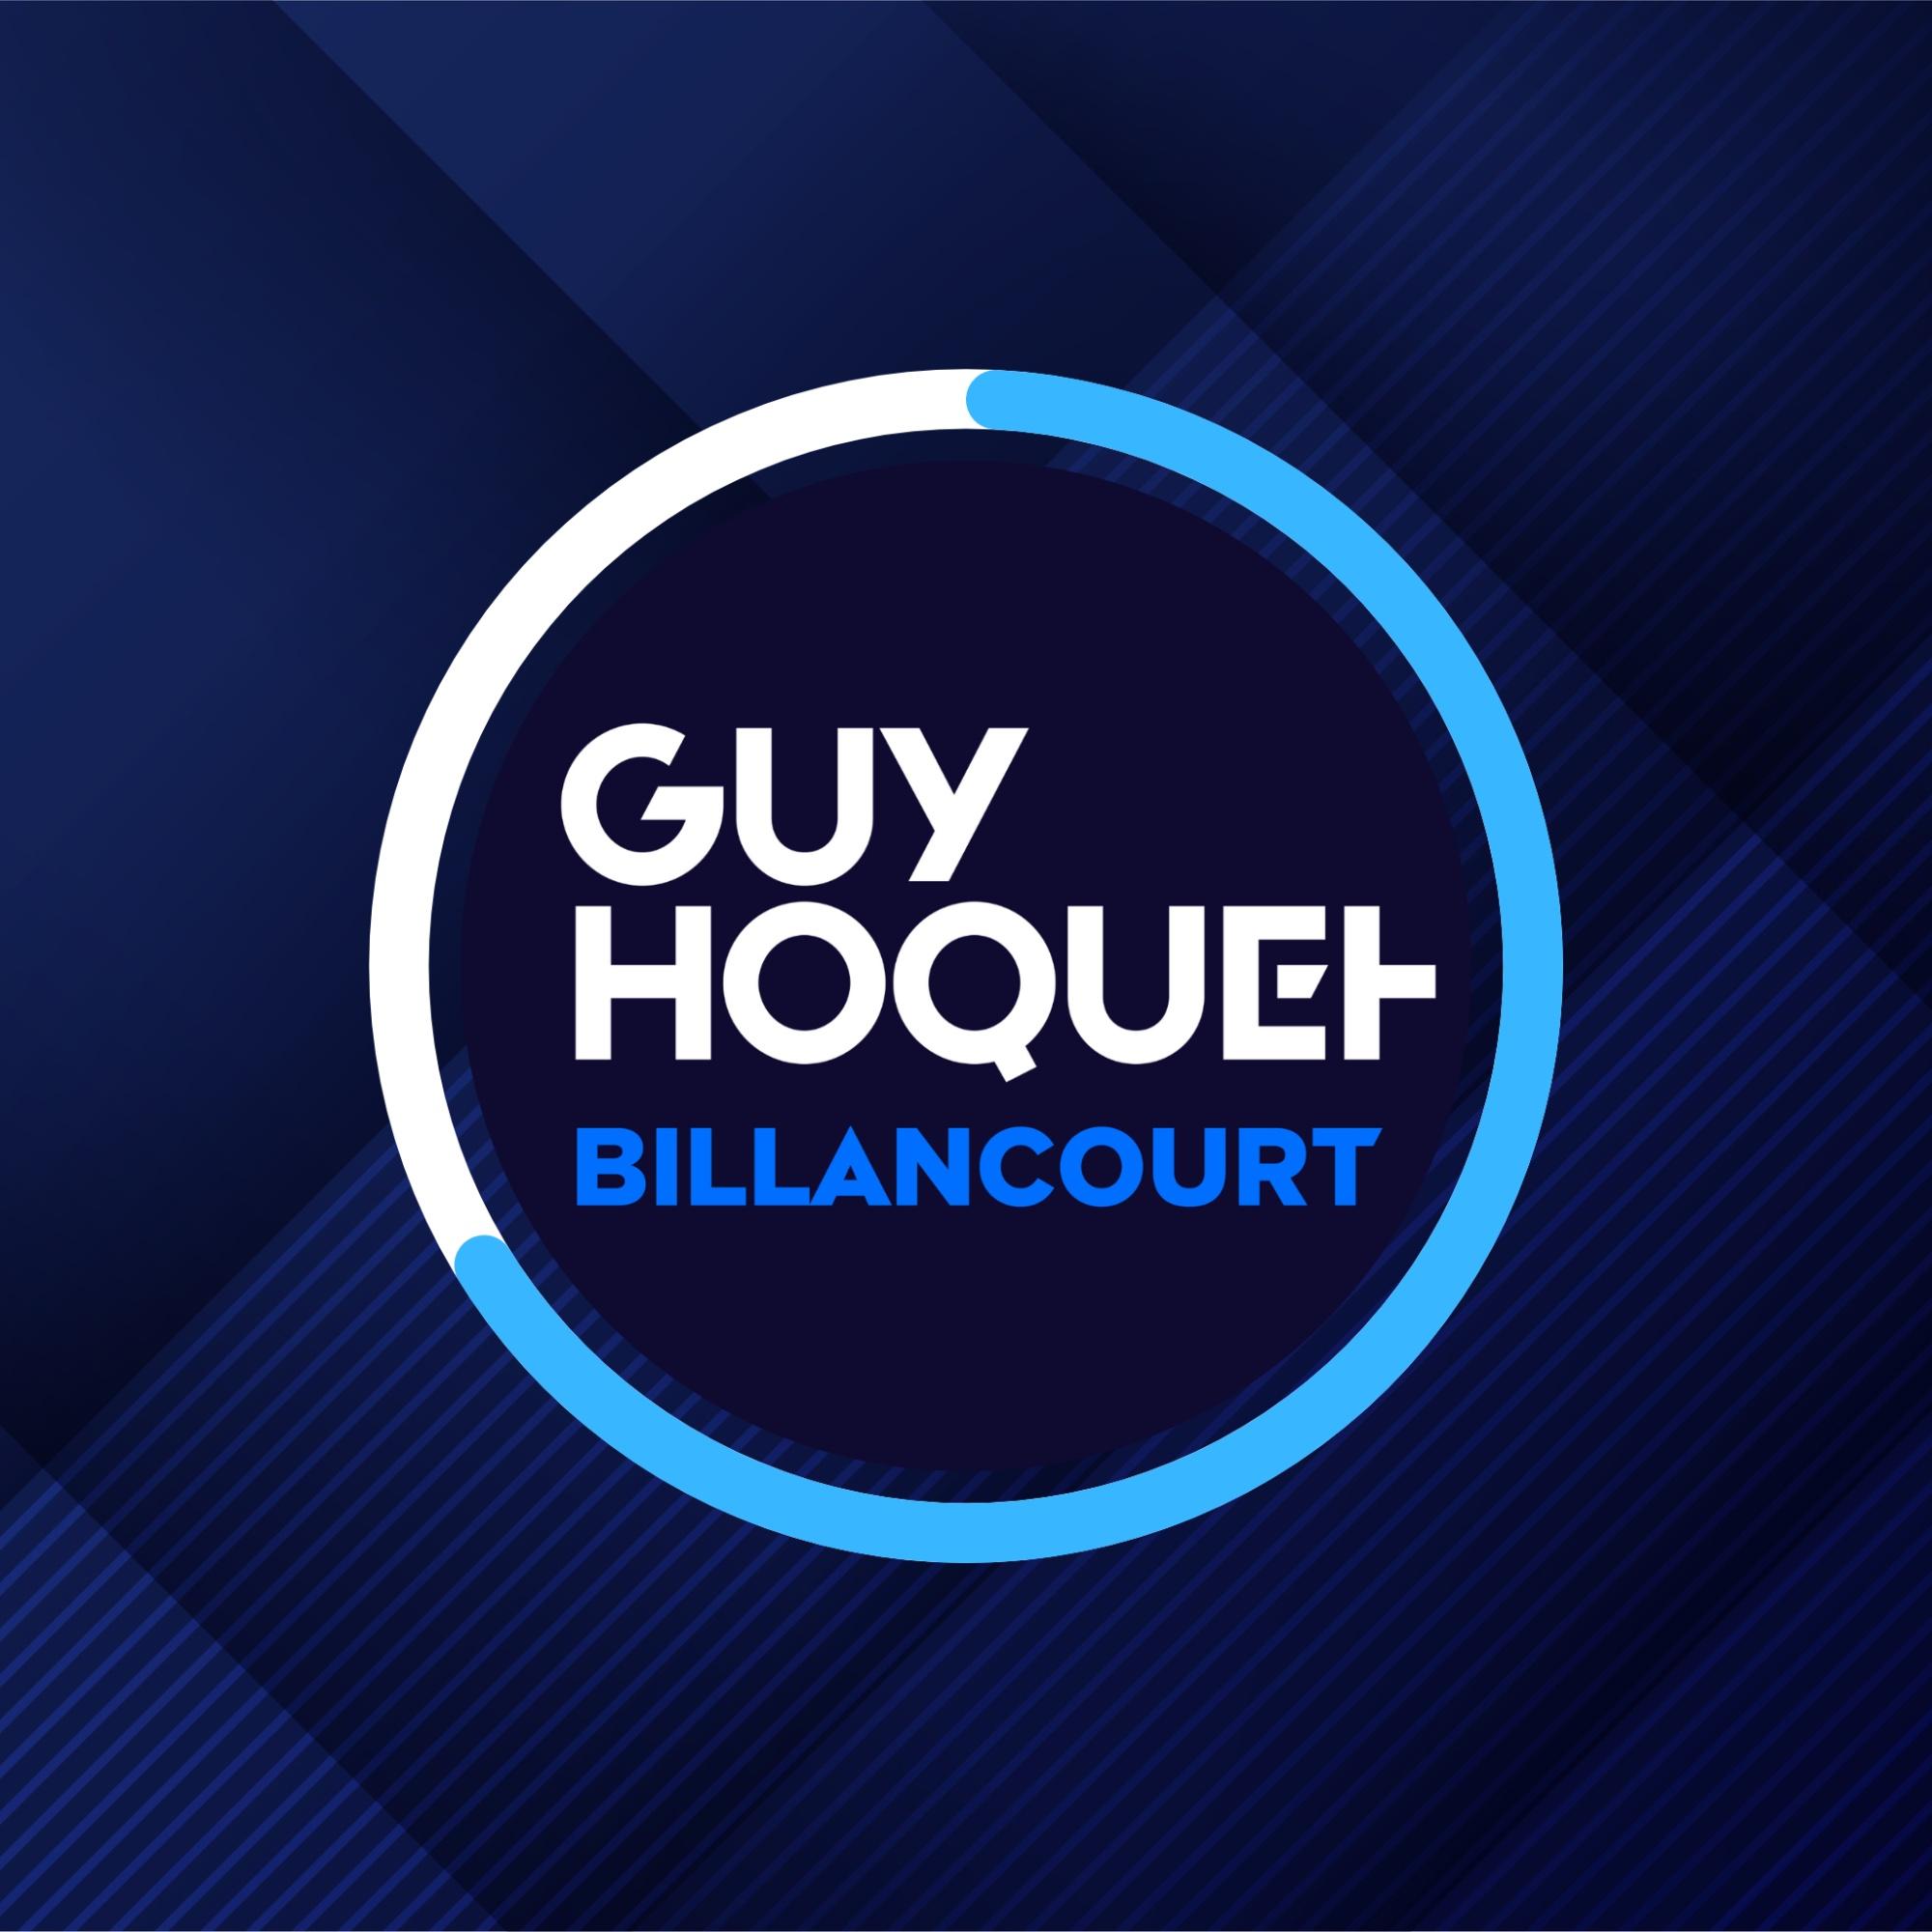 Guy Hoquet Boulogne Billancourt